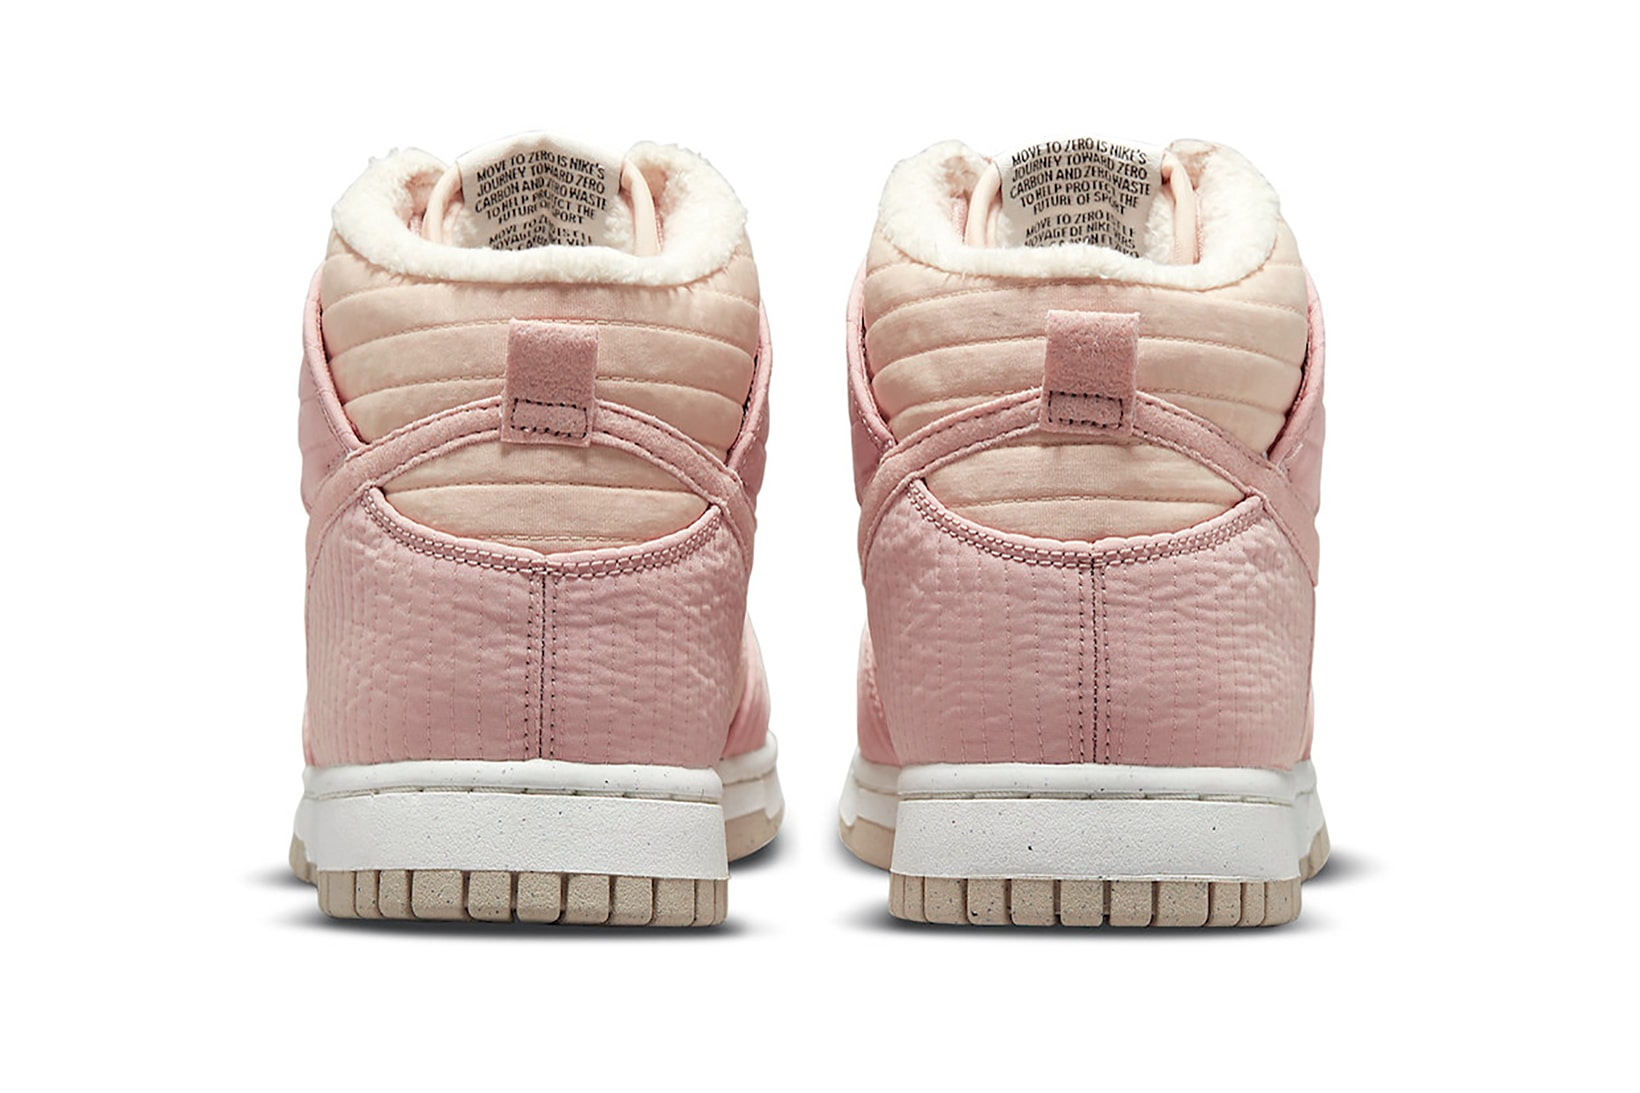 Nike Dunk High Toasty Pink White Womens Sneakers Shoes Kicks Footwear Sustainable Heel